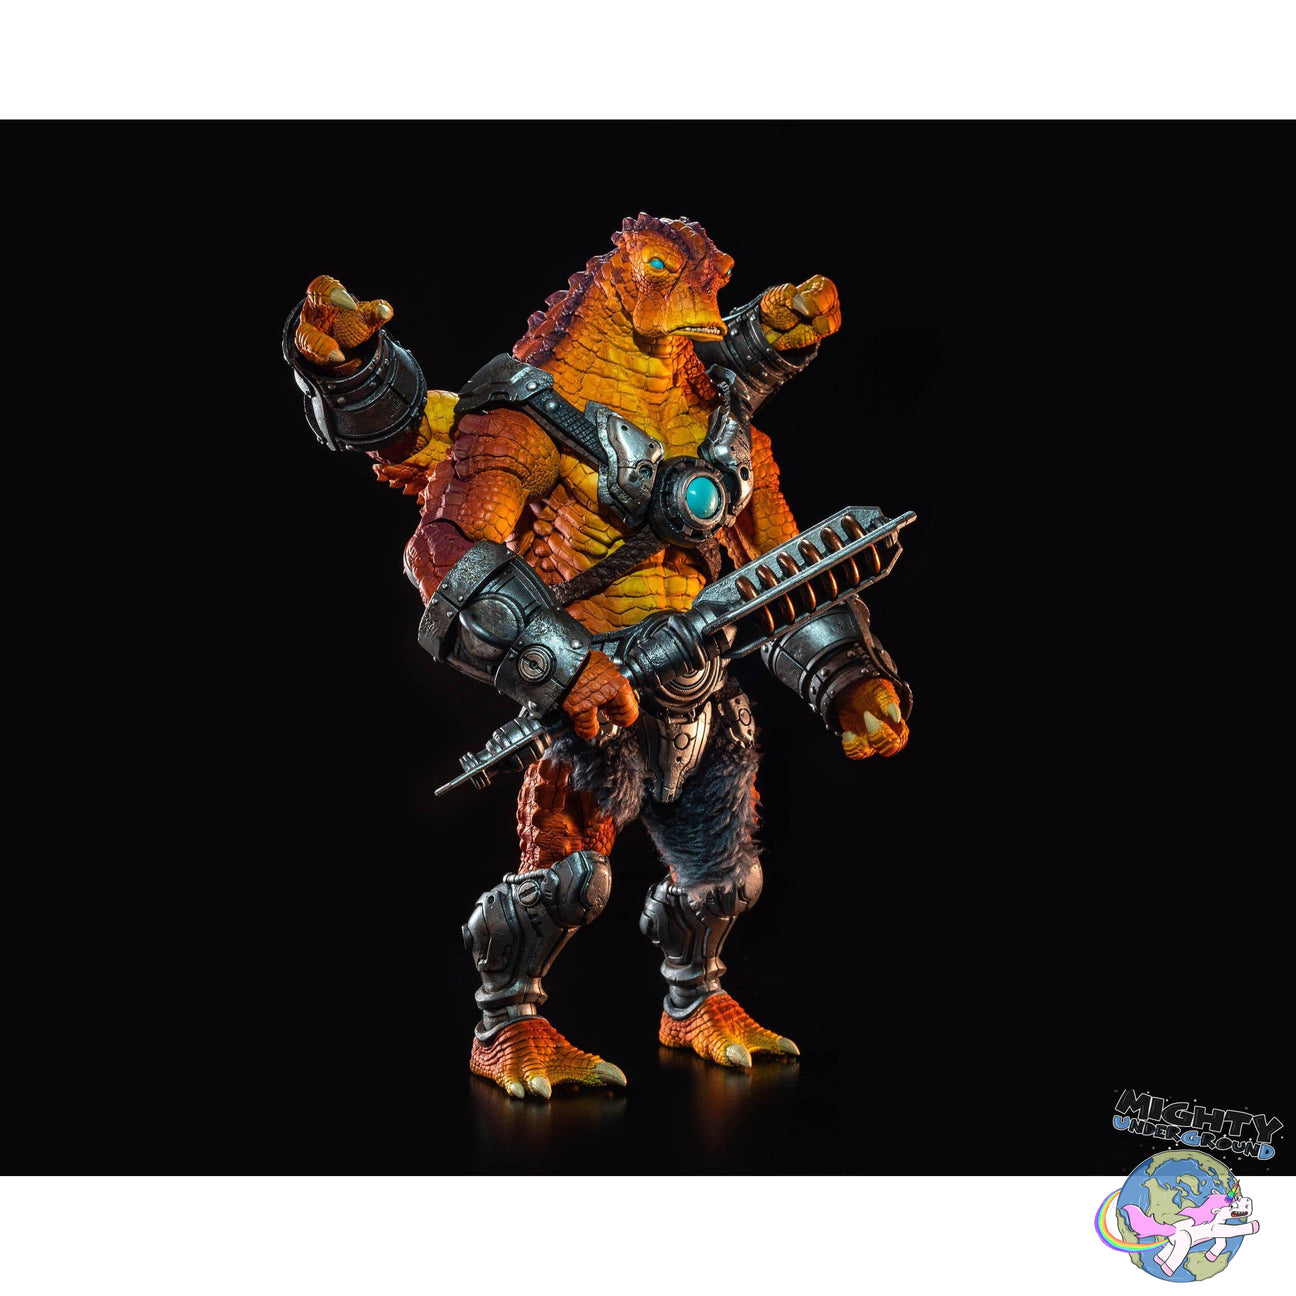 Cosmic Legions: Kraggnar (Ogre Scale)-Actionfiguren-Four Horsemen Toy Design-Mighty Underground